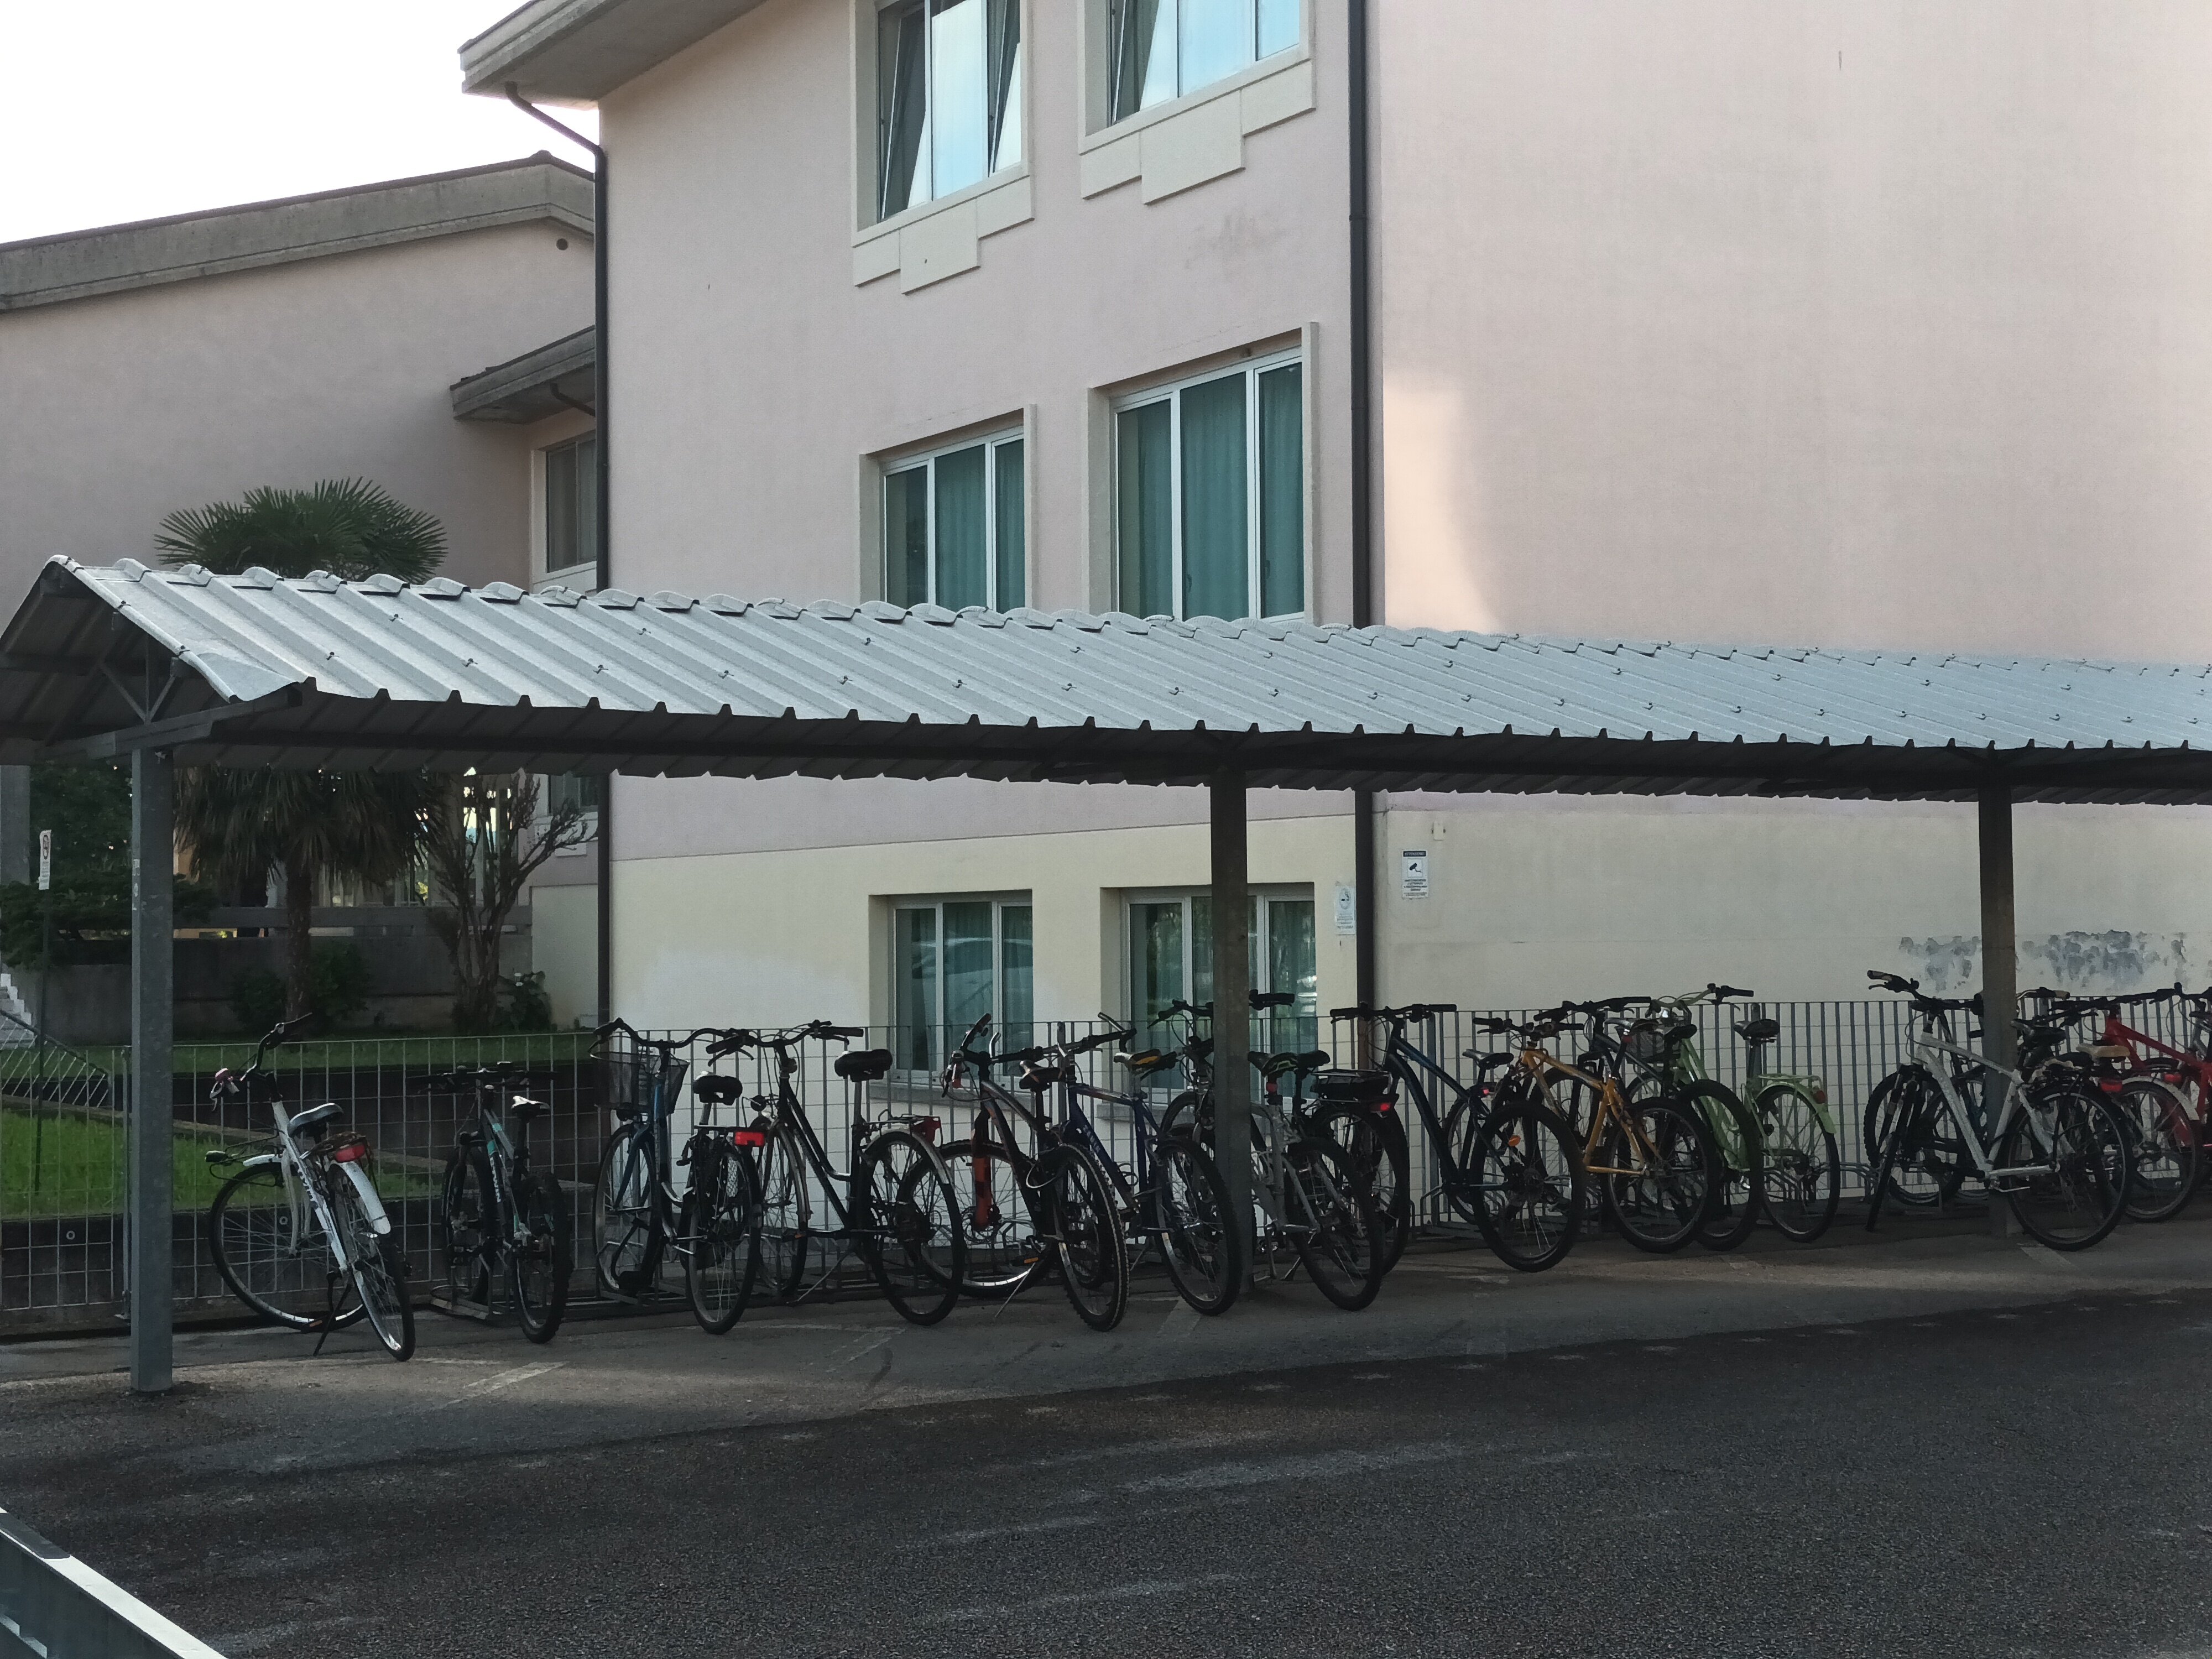 Parking bicicletas